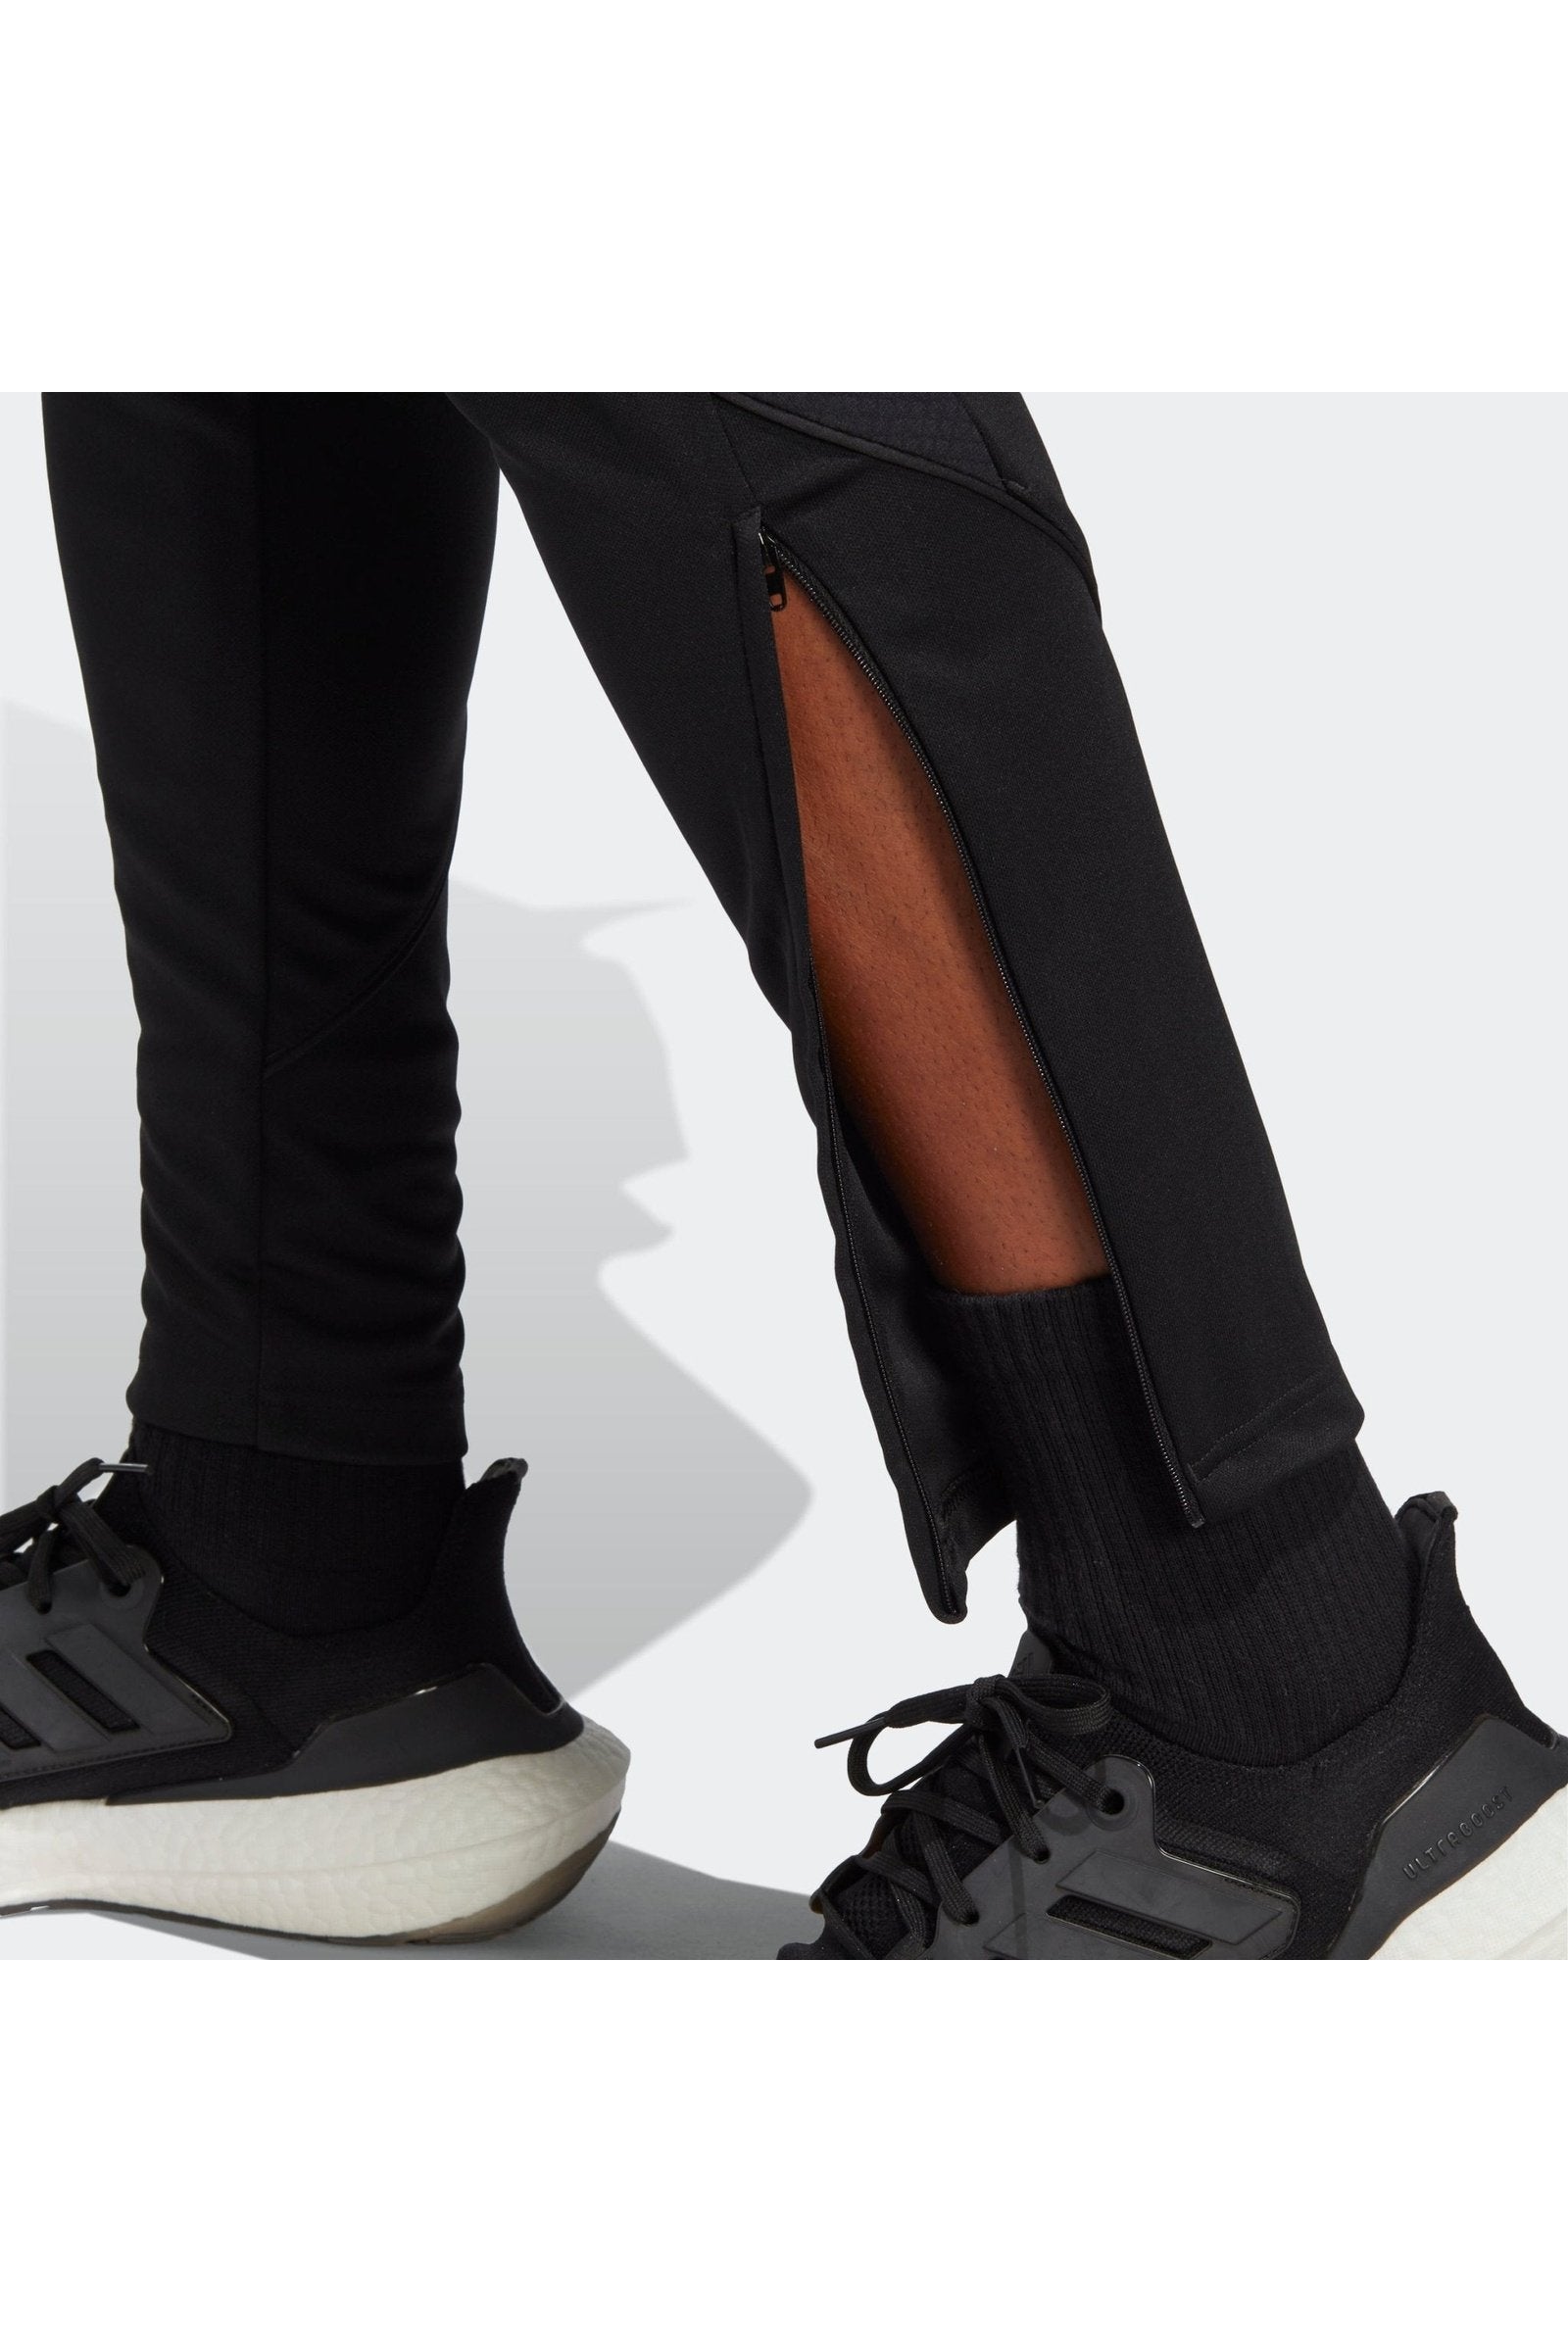 ADIDAS - מכנסיים ארוכים TIRO23 בצבע אפור ושחור - MASHBIR//365